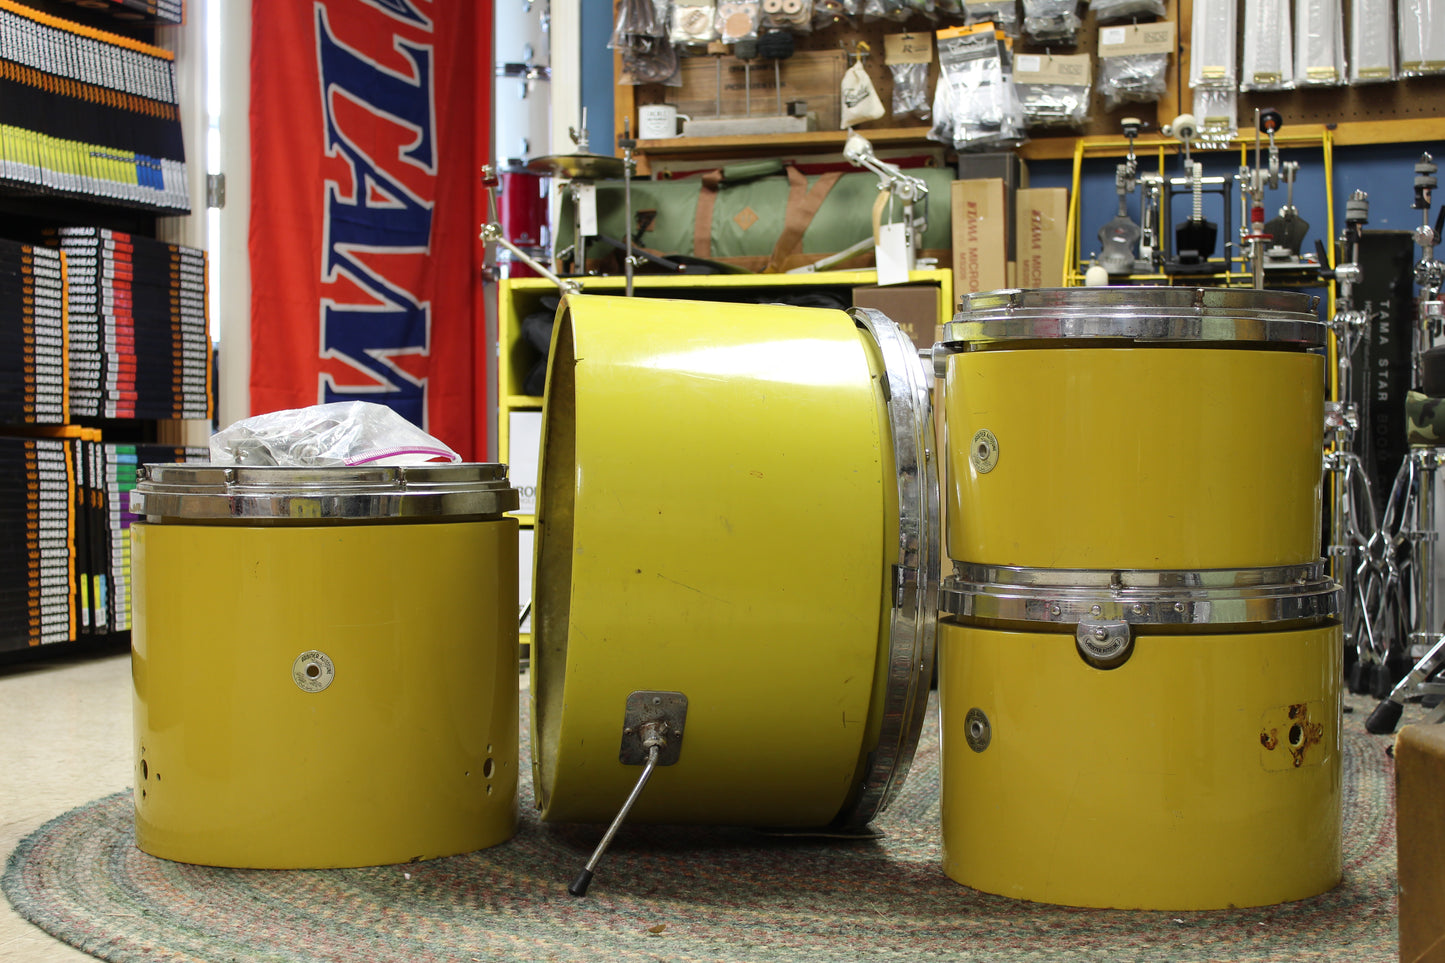 1970s Arbiter Autotune Drum Kit in Yellow 14x22 16x16 12x15 10x14 (project)